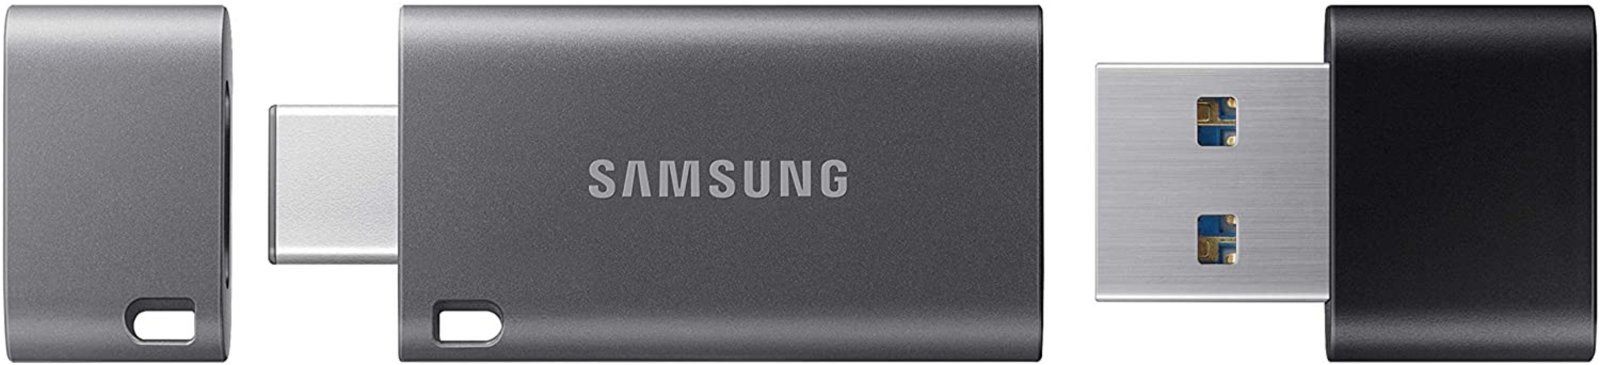 Samsung Duo Plus 128 GB USB 3.0